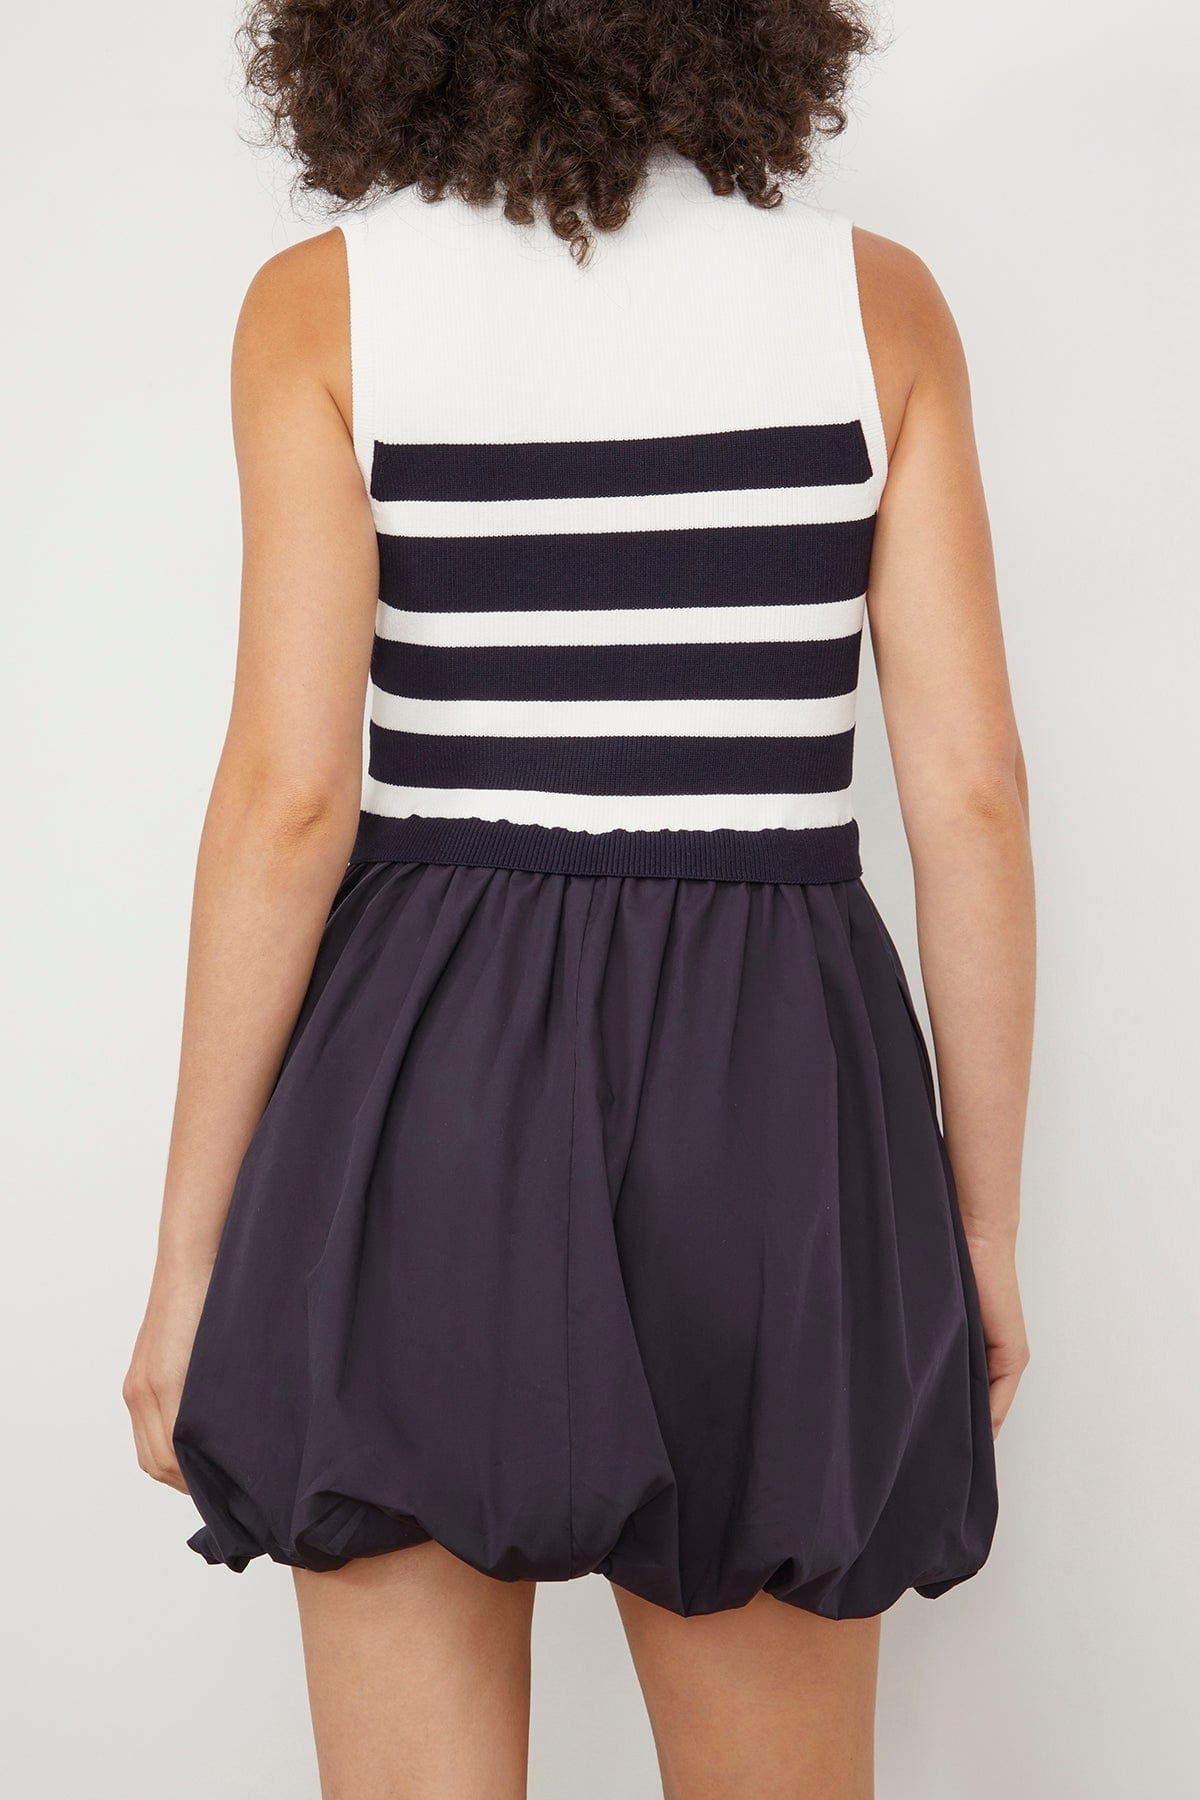 Josey Sleeveless Bubble Skirt Mini Dress in Midnight Stripe - 4